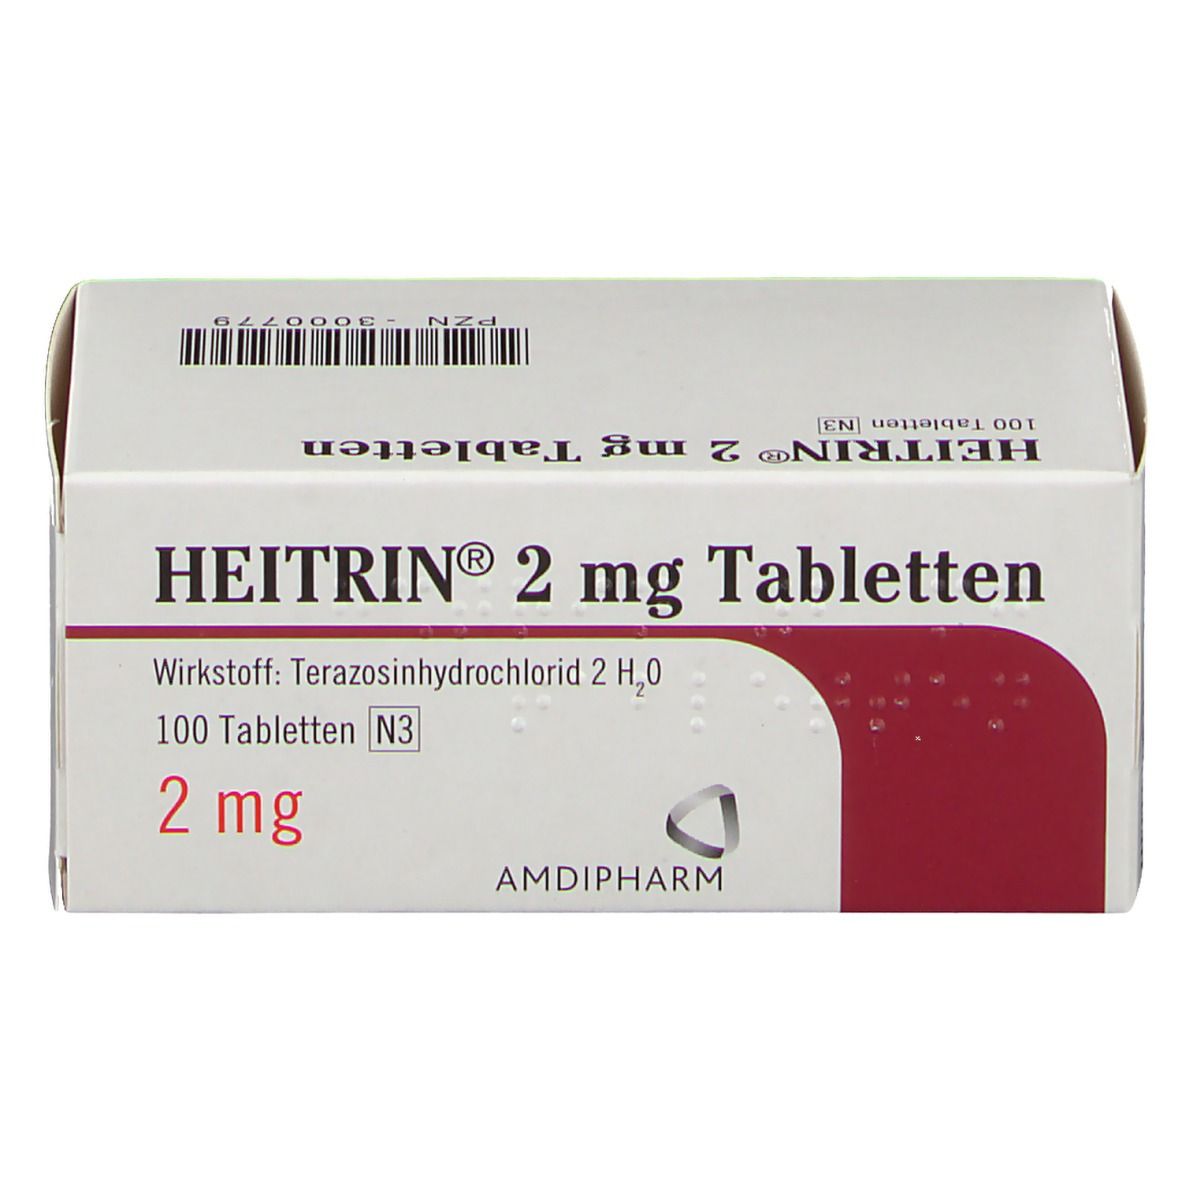 Heitrin 2 mg